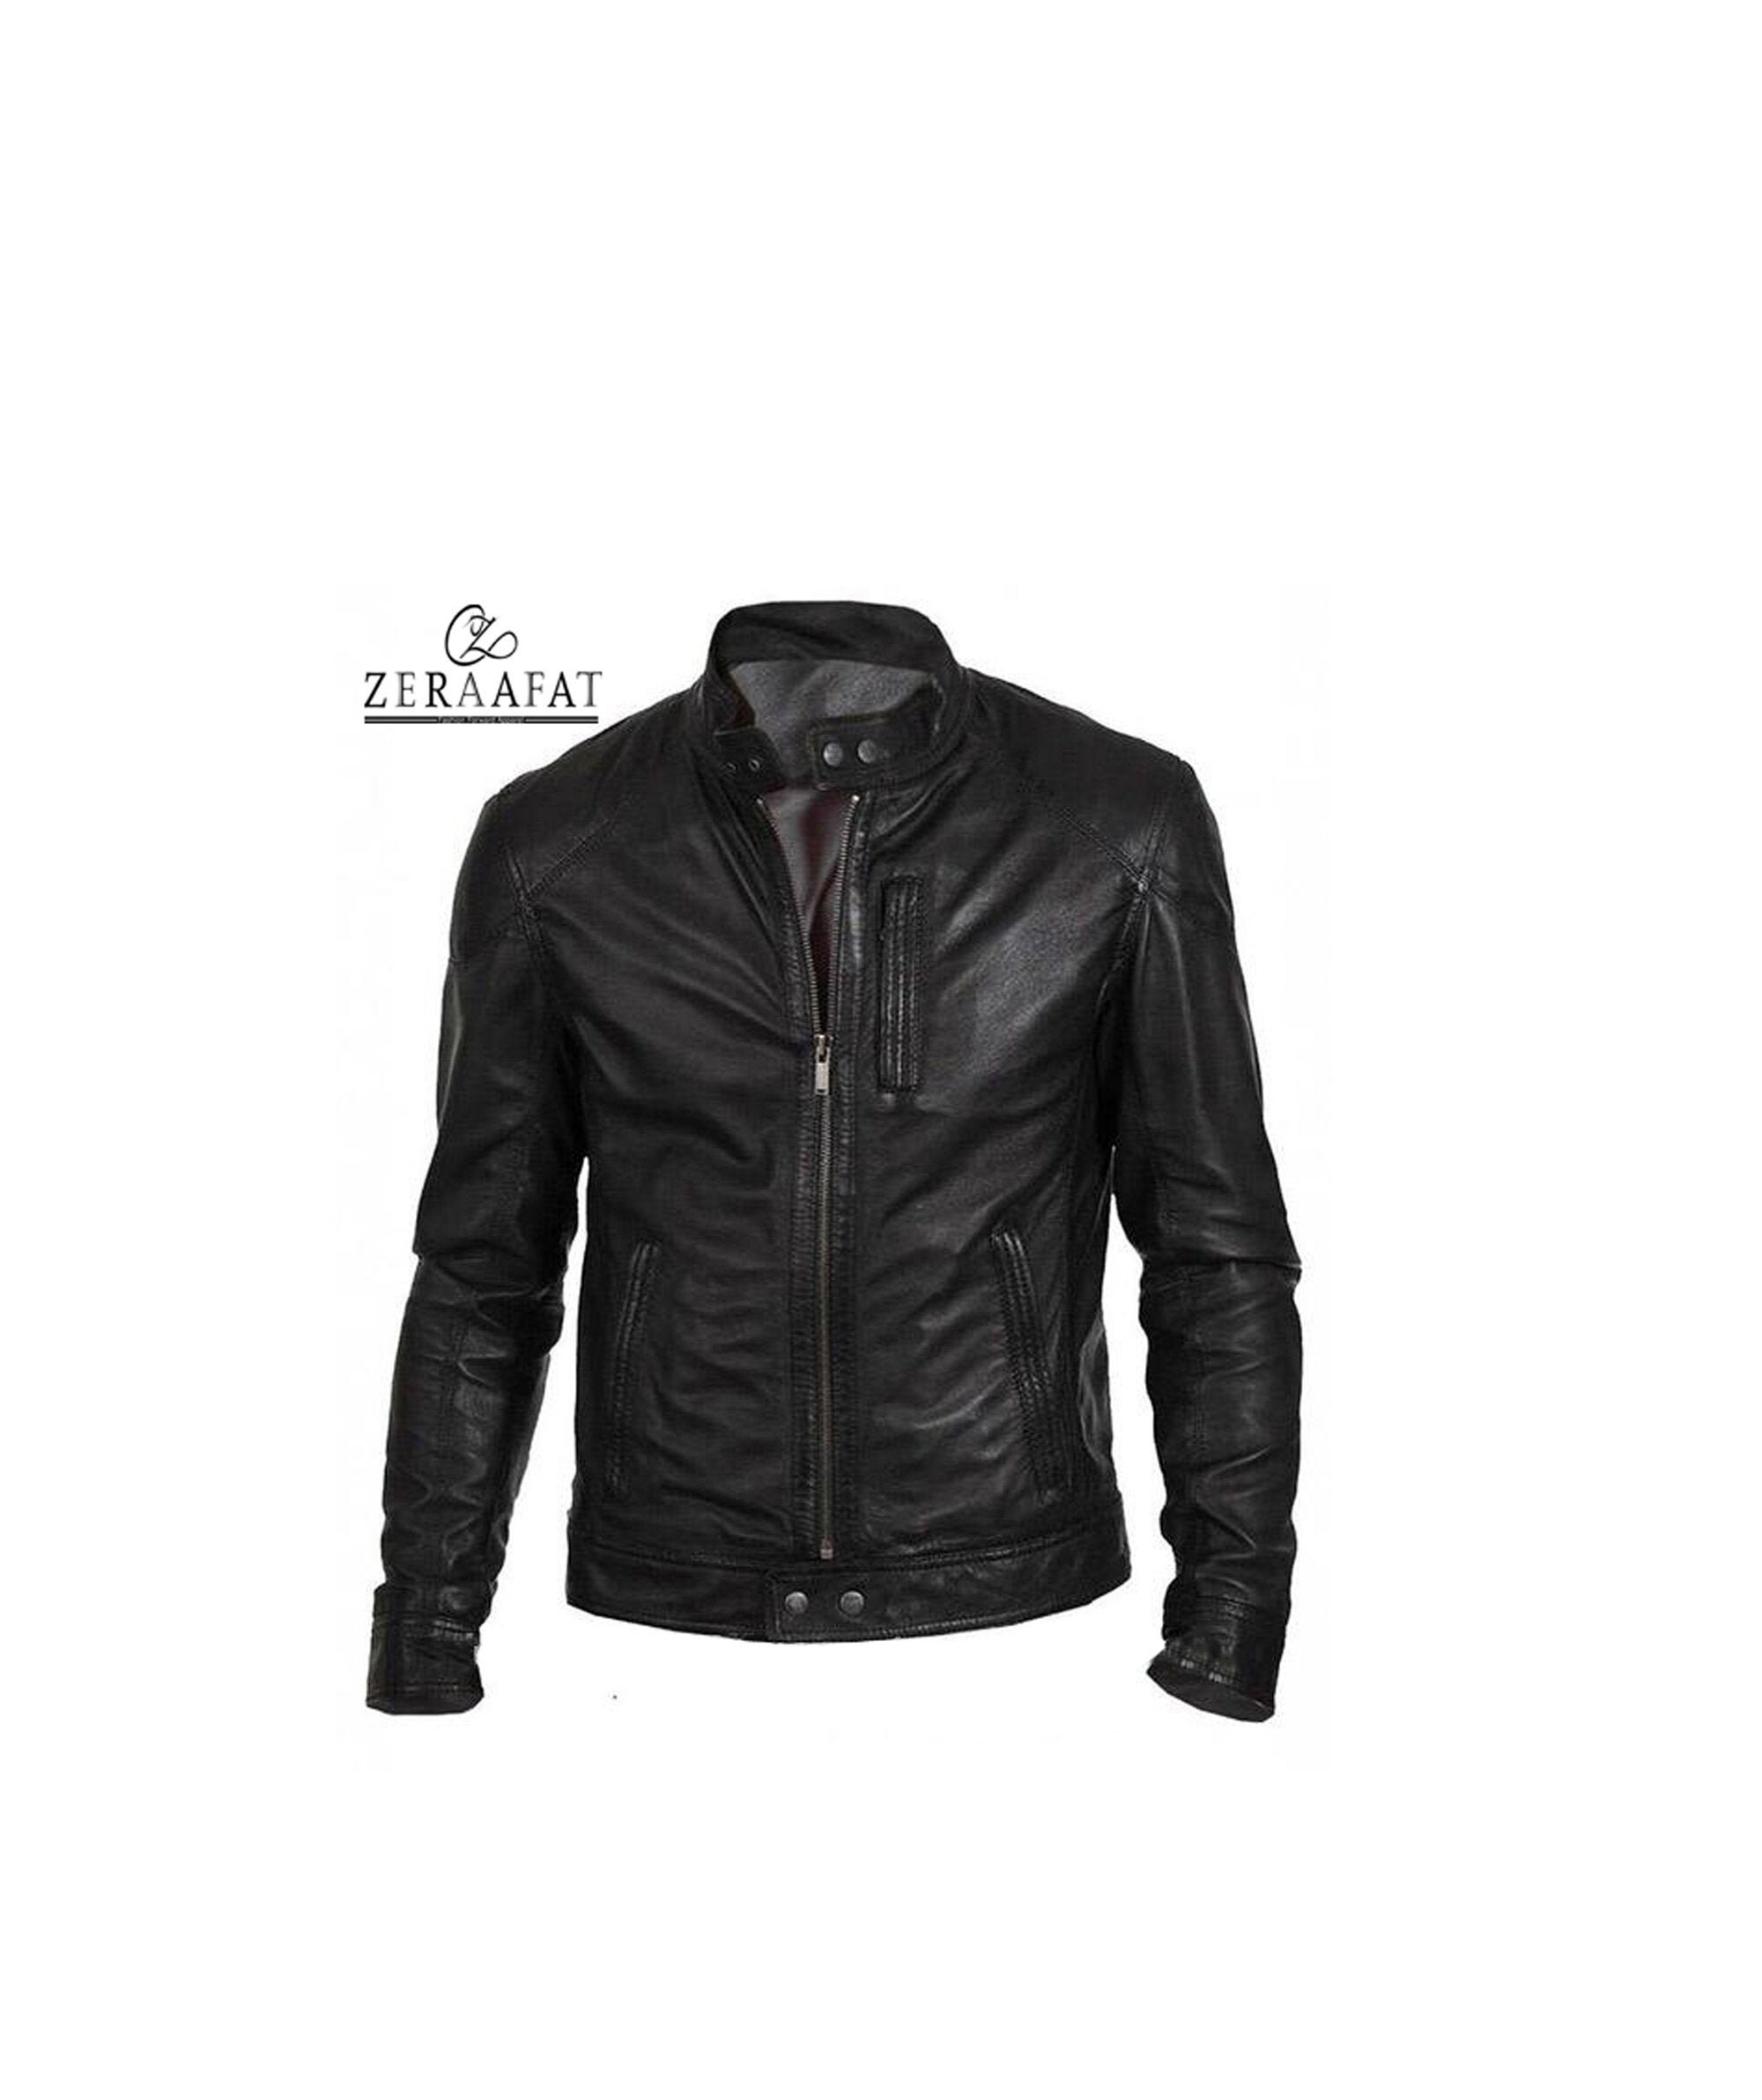 Mens Blazer Coat Jacket 100% Genuine Sheep Vintage/Antique Leather by Zeraafat